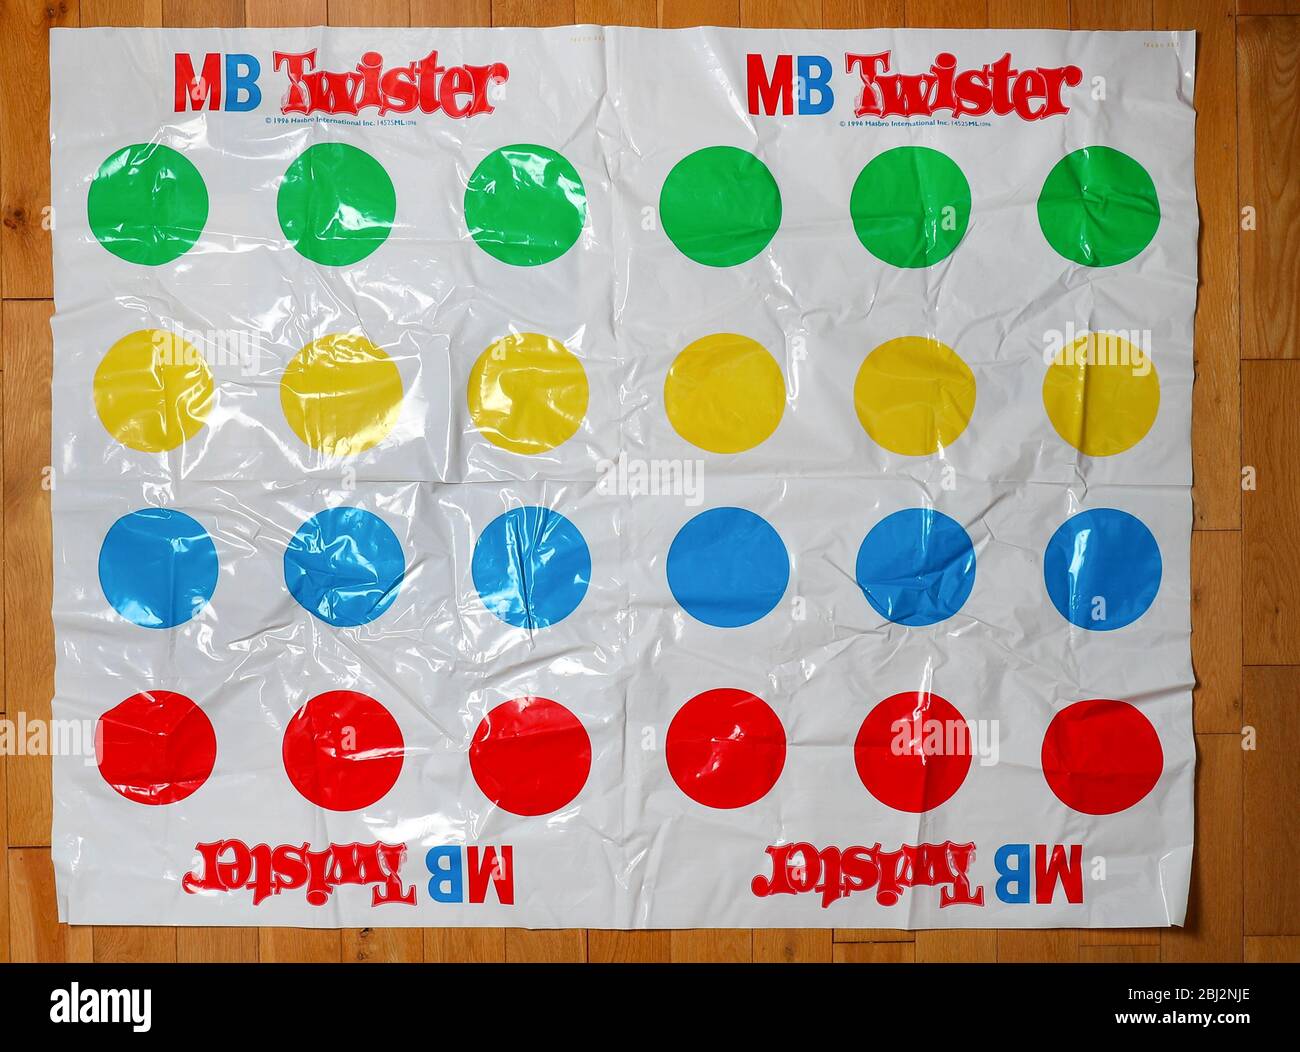 Twister game mat Stock Photo